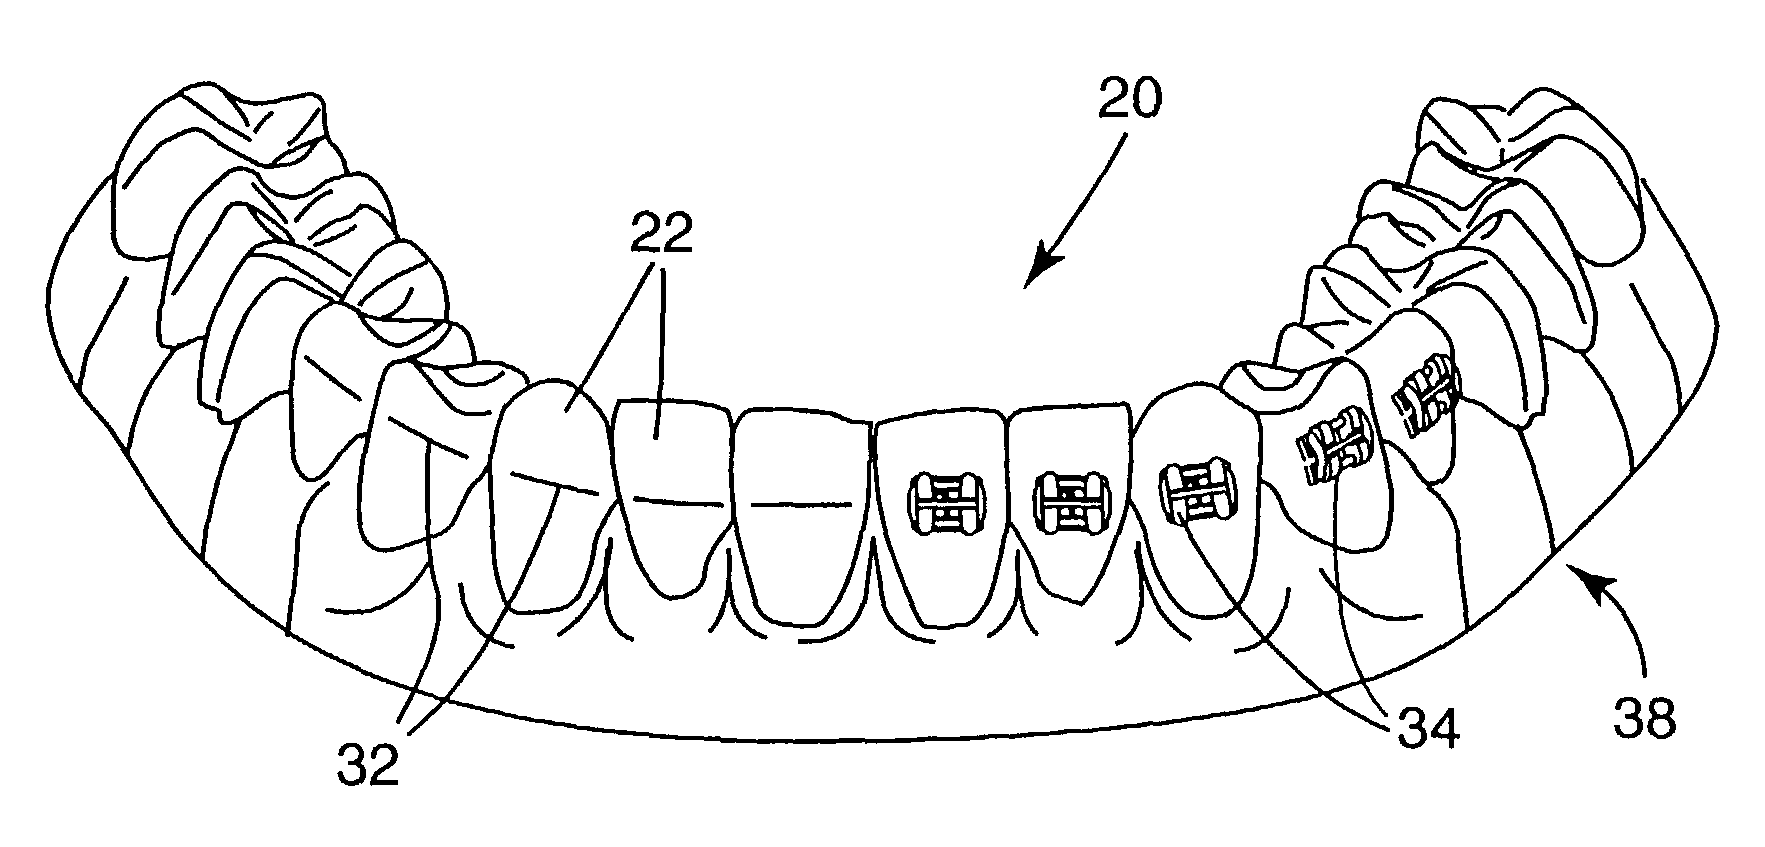 Orthodontic appliances having a contoured bonding surface